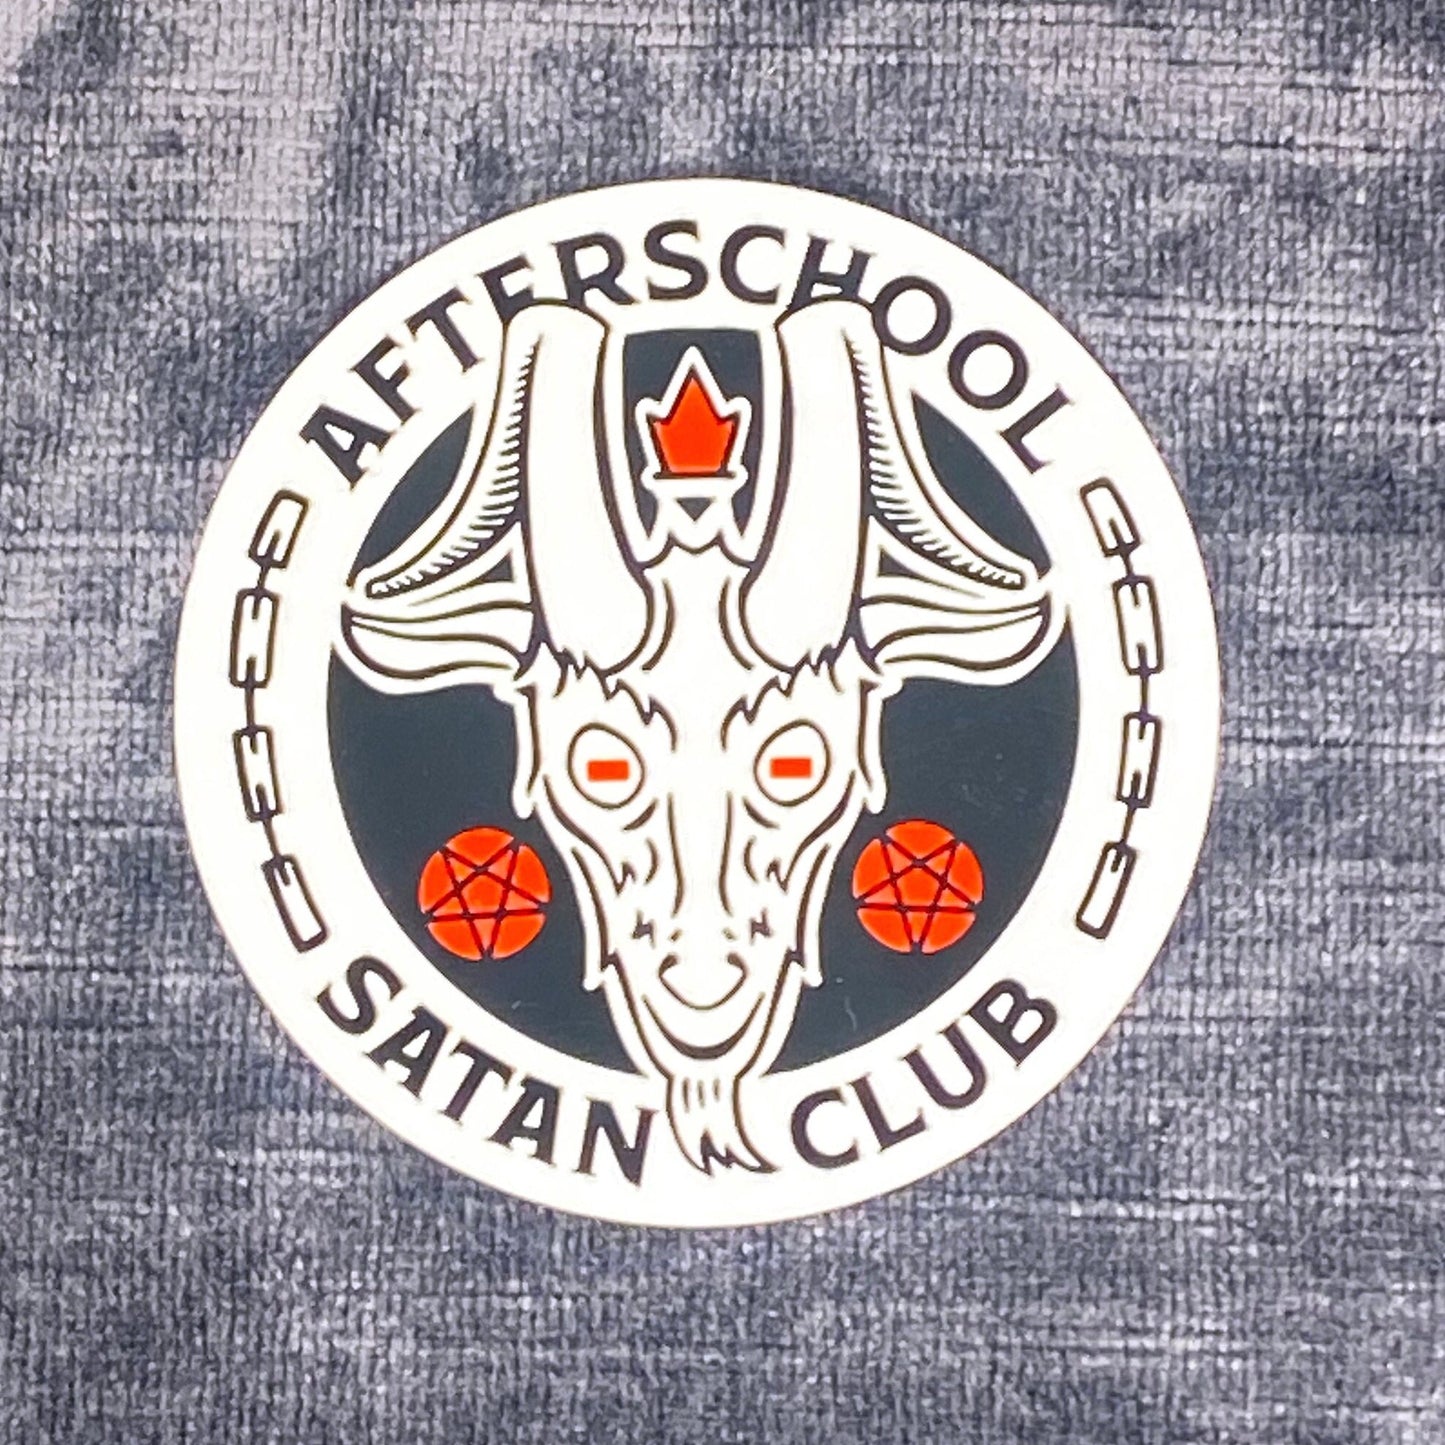 Afterschool Satan Club